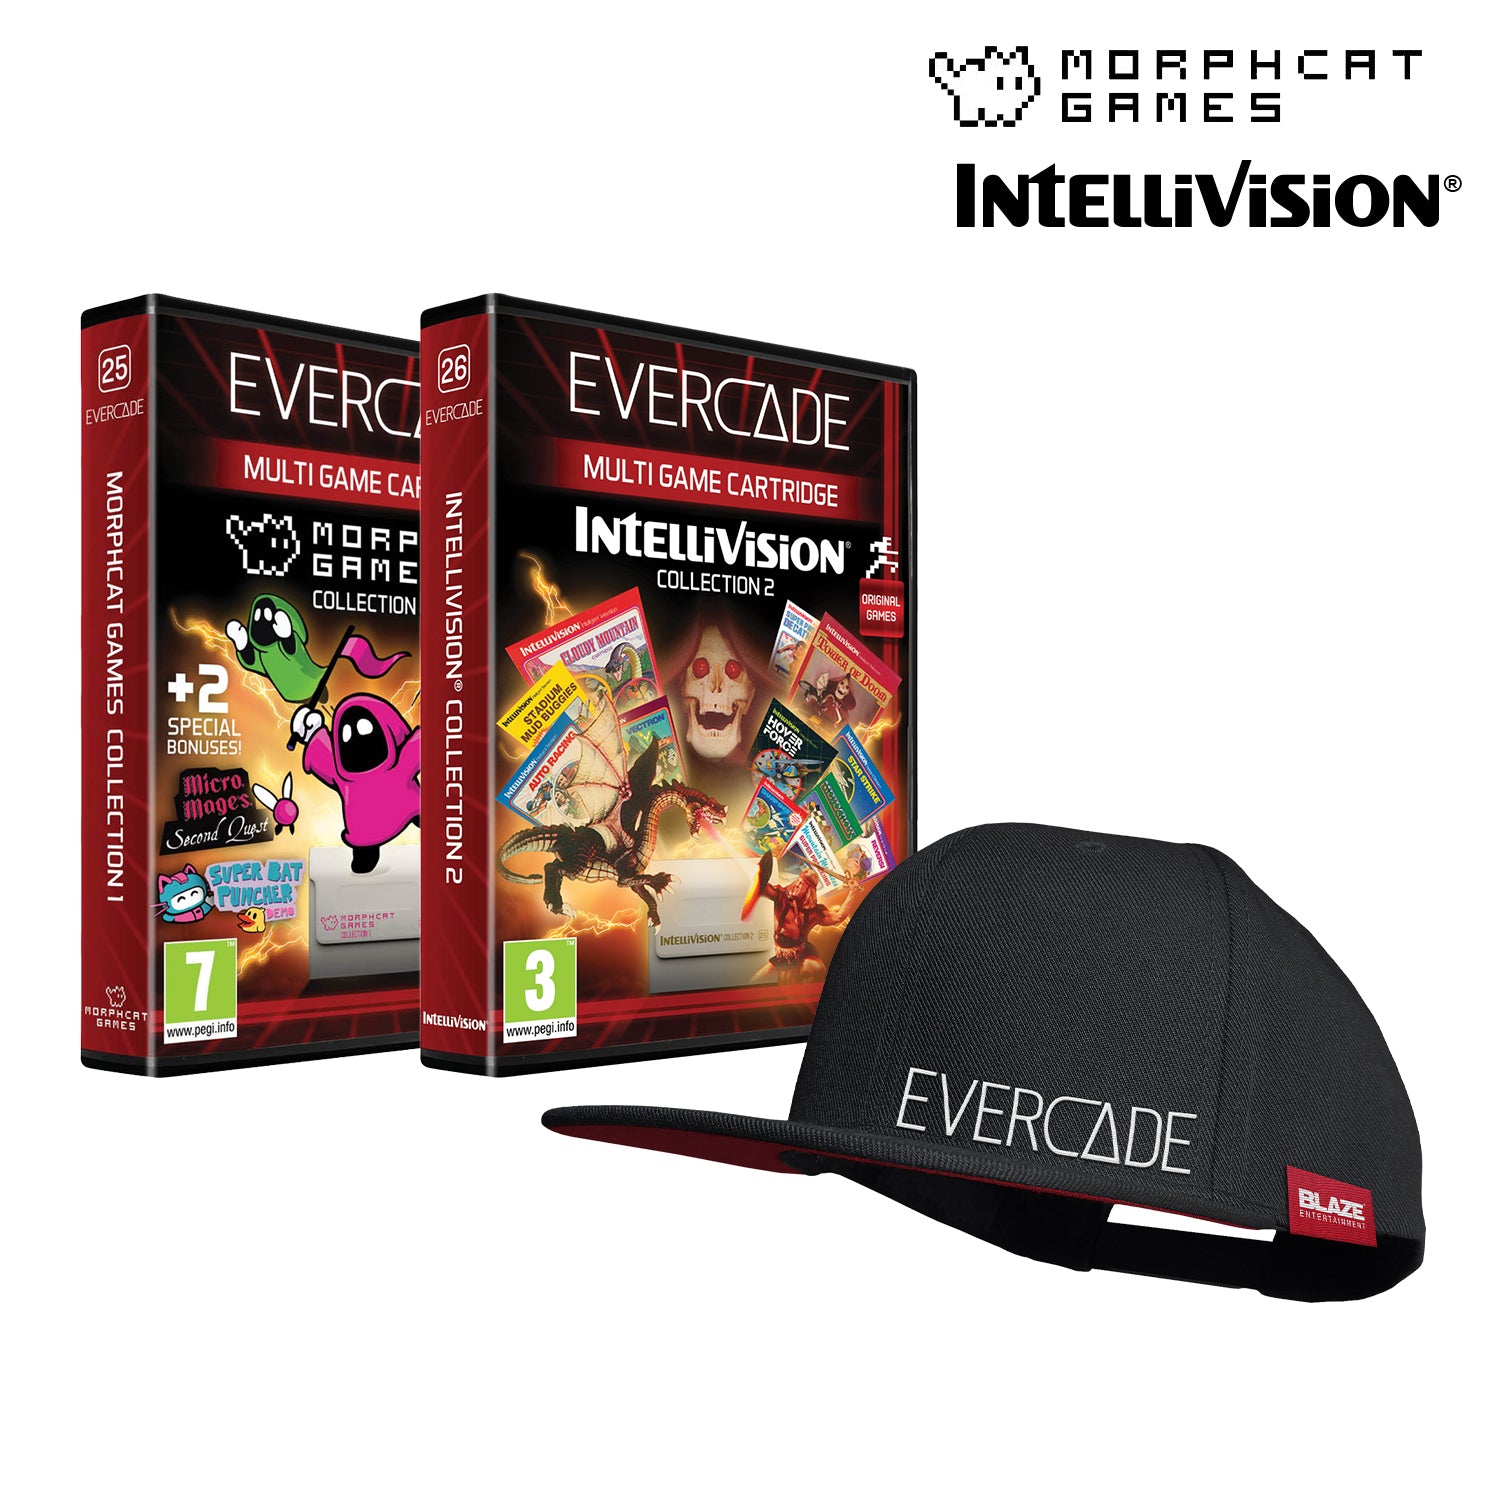 Morphcat Games and Intellivision 2 Bundle